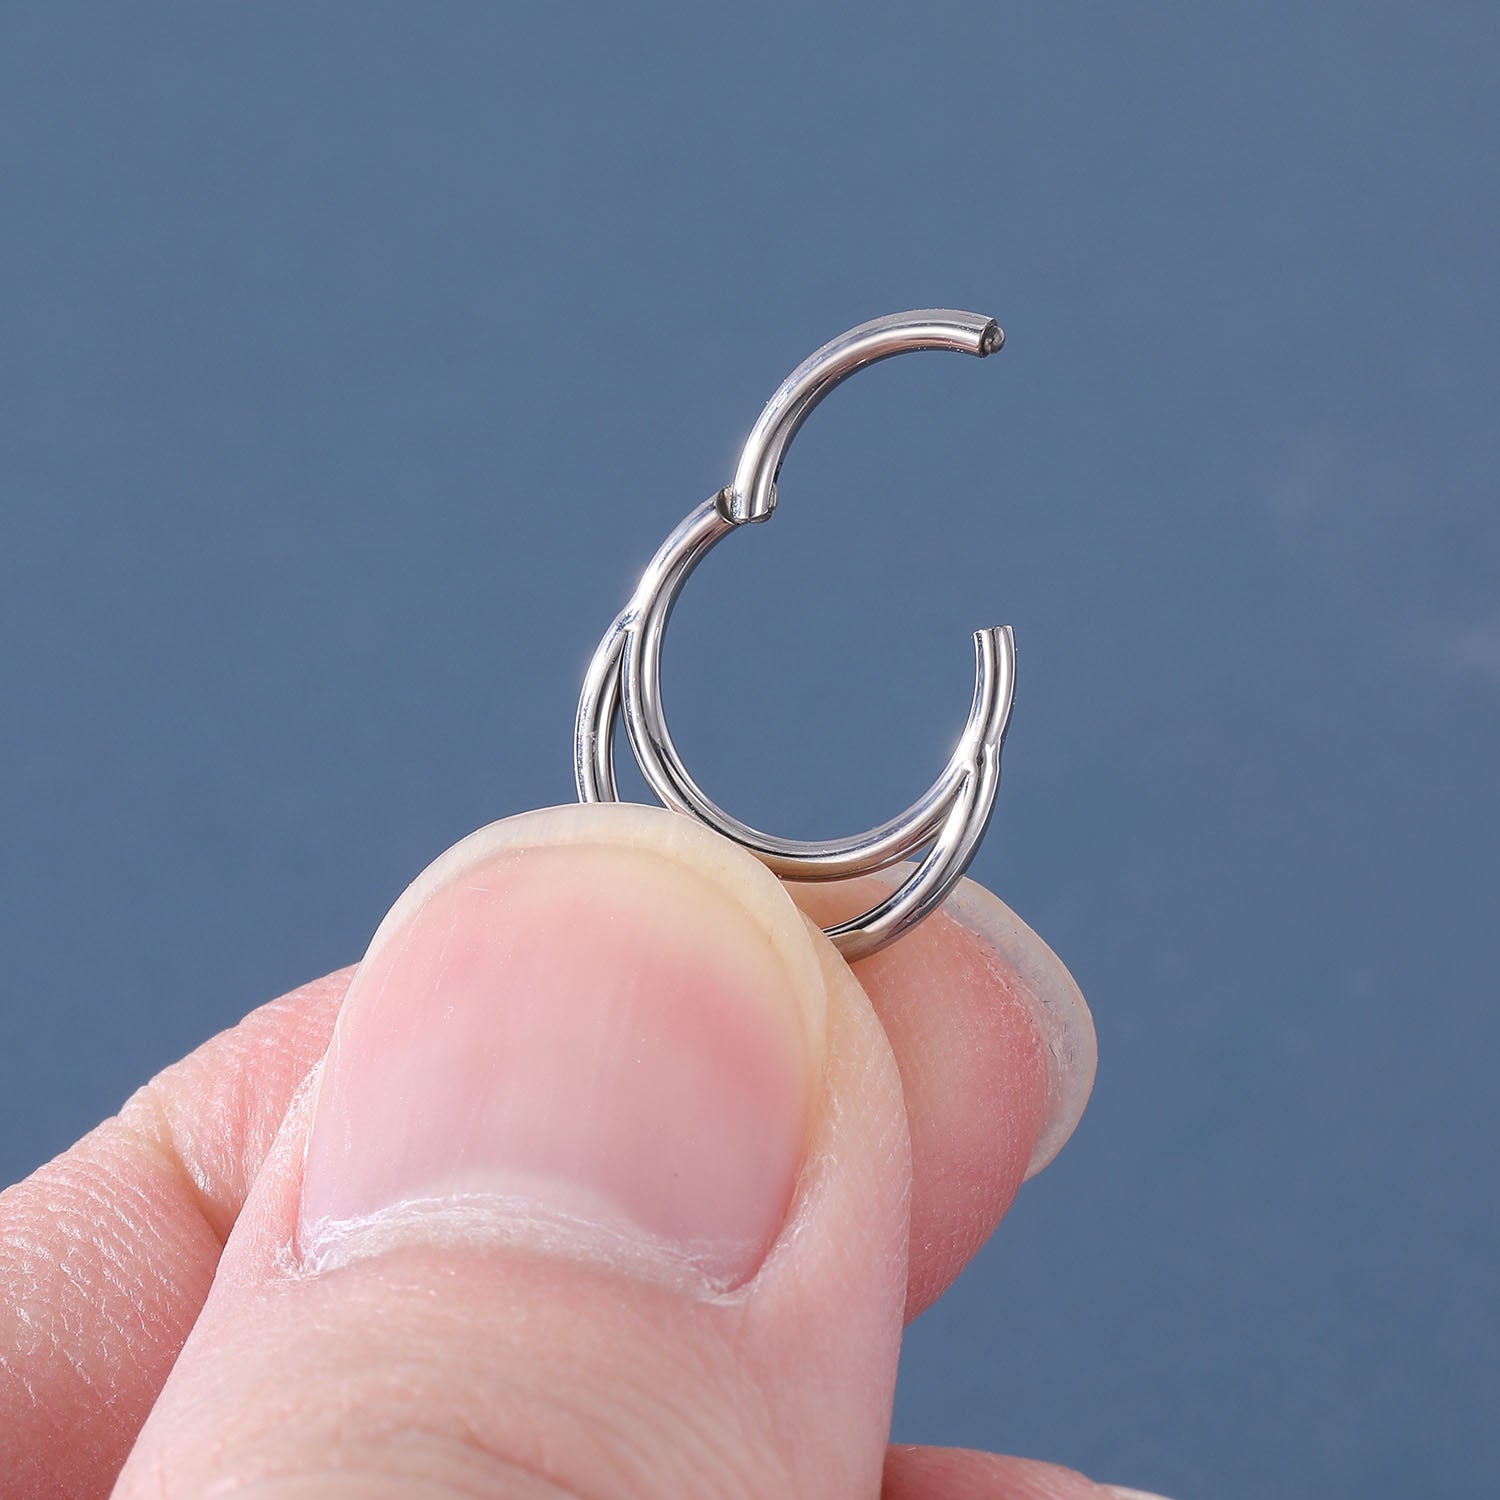 16g-g23-titanium-nose-septum-clicker-moon-conch-helix-cartilage-piercing